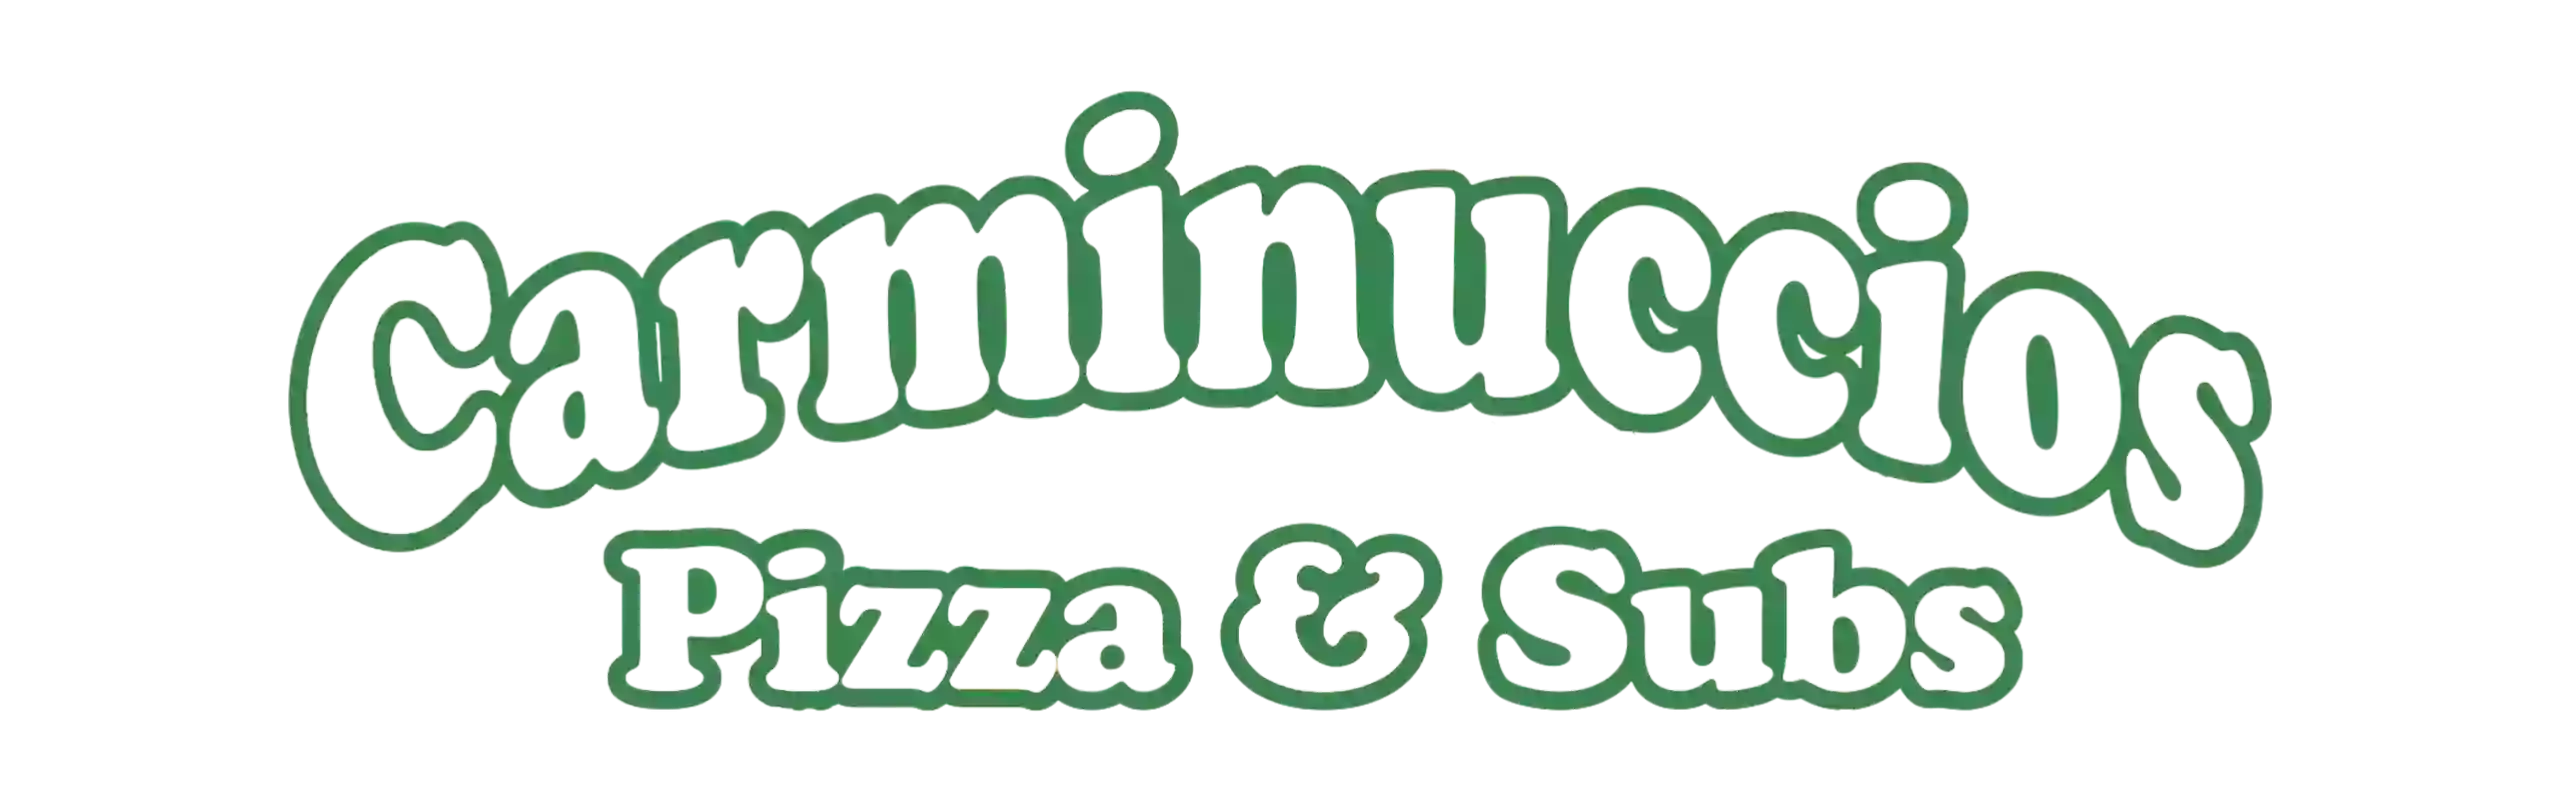 Carminuccio's Pizza & Subs